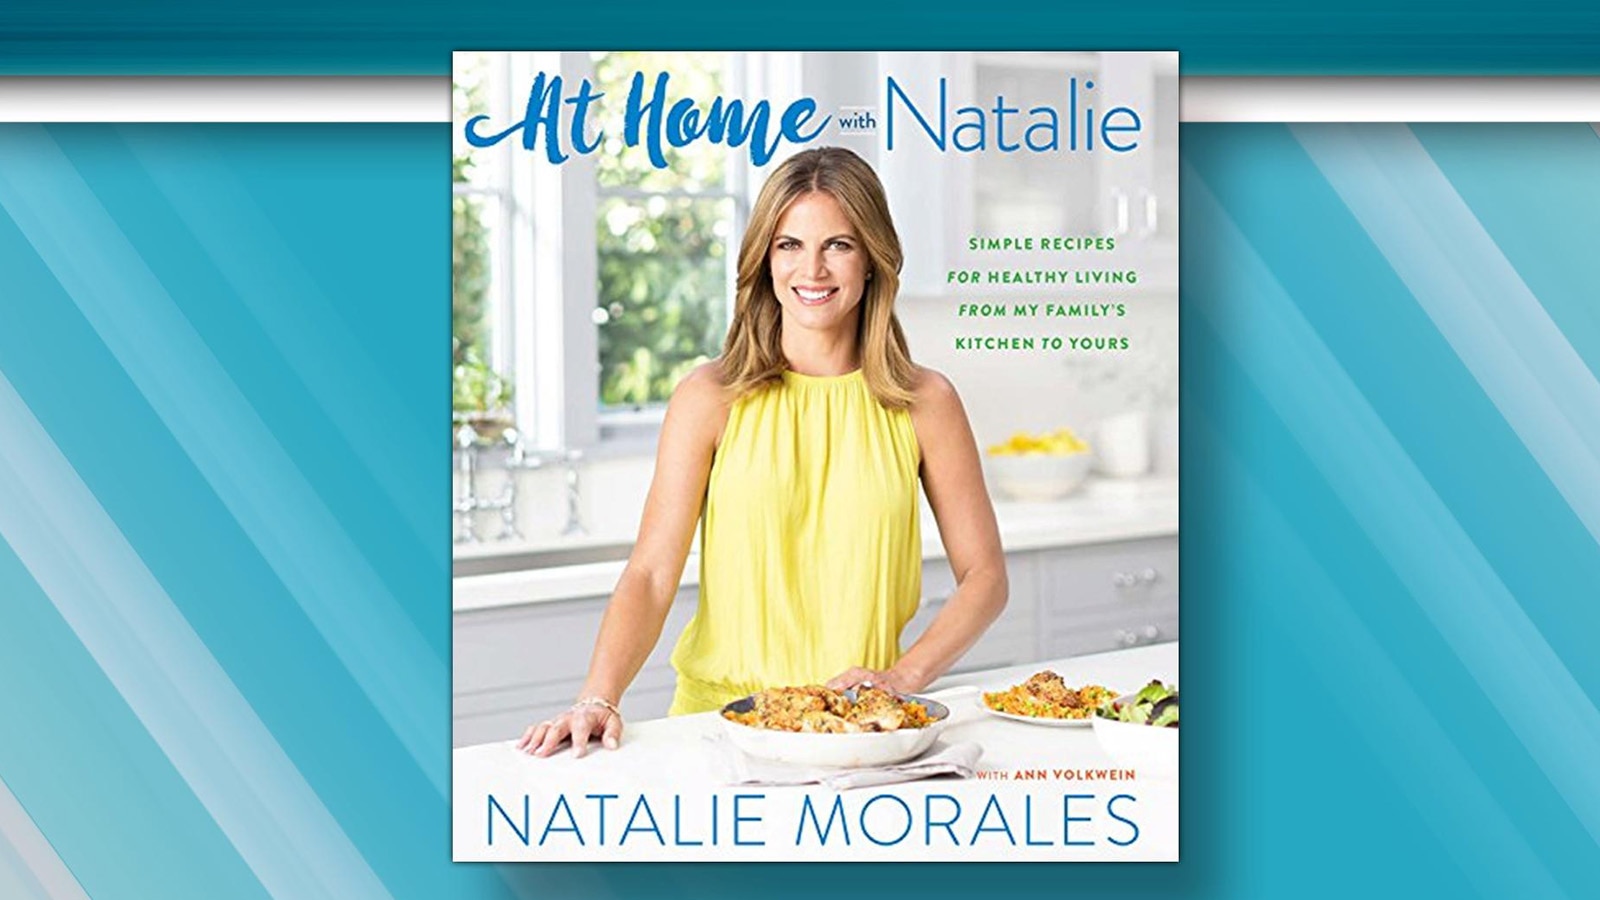 Natalie morales. Yours-Natalie. Yours-Natalie записи. Access living